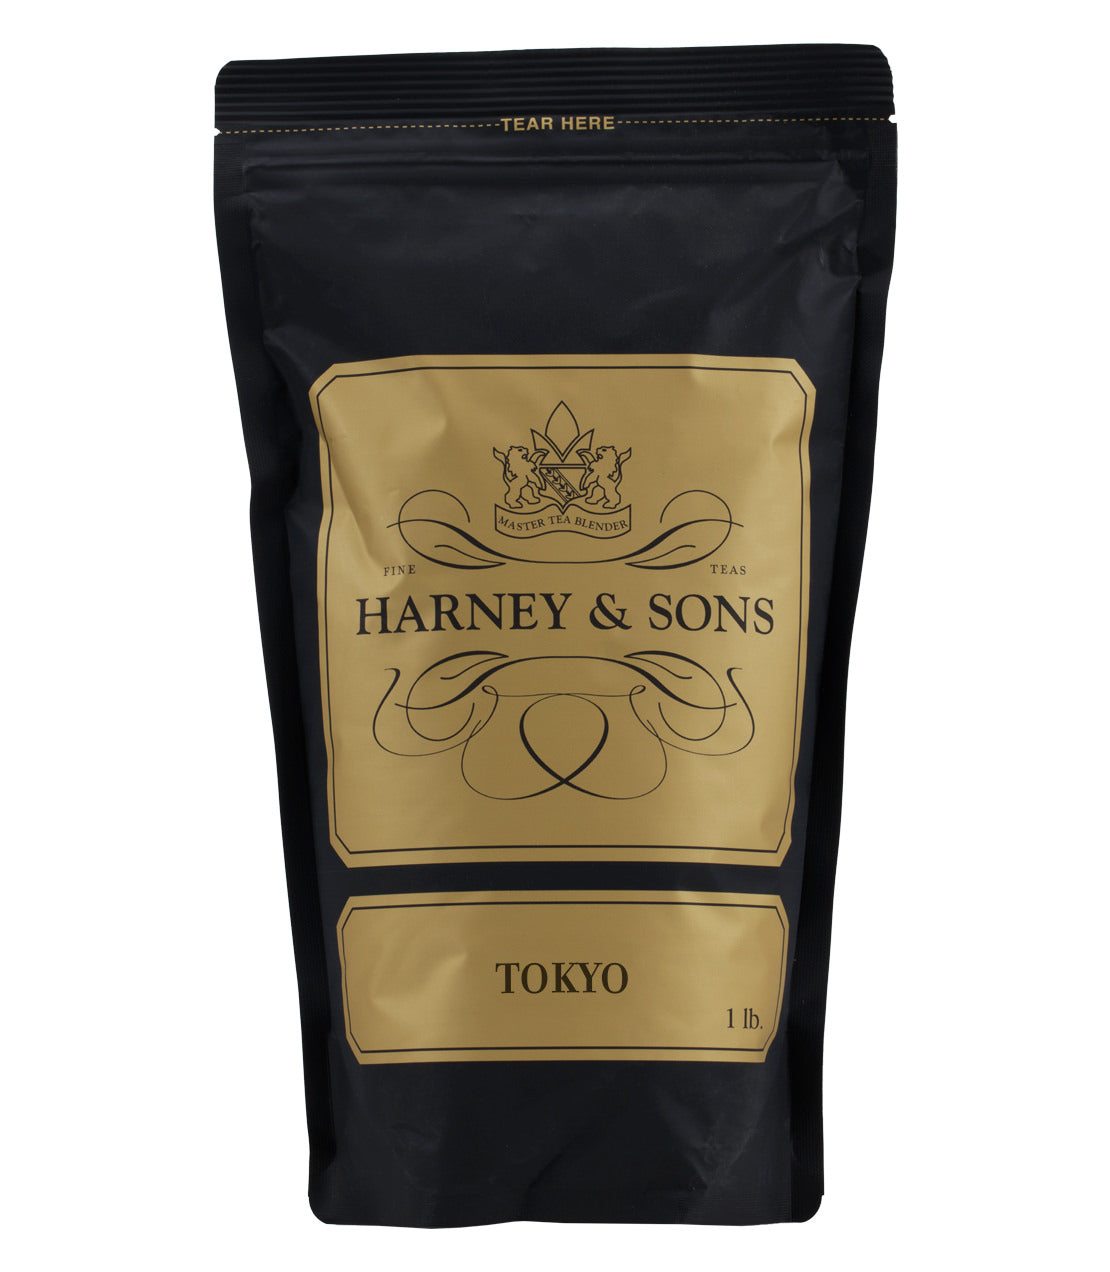 Tokyo - Loose 1 lb. Bag - Harney & Sons Fine Teas